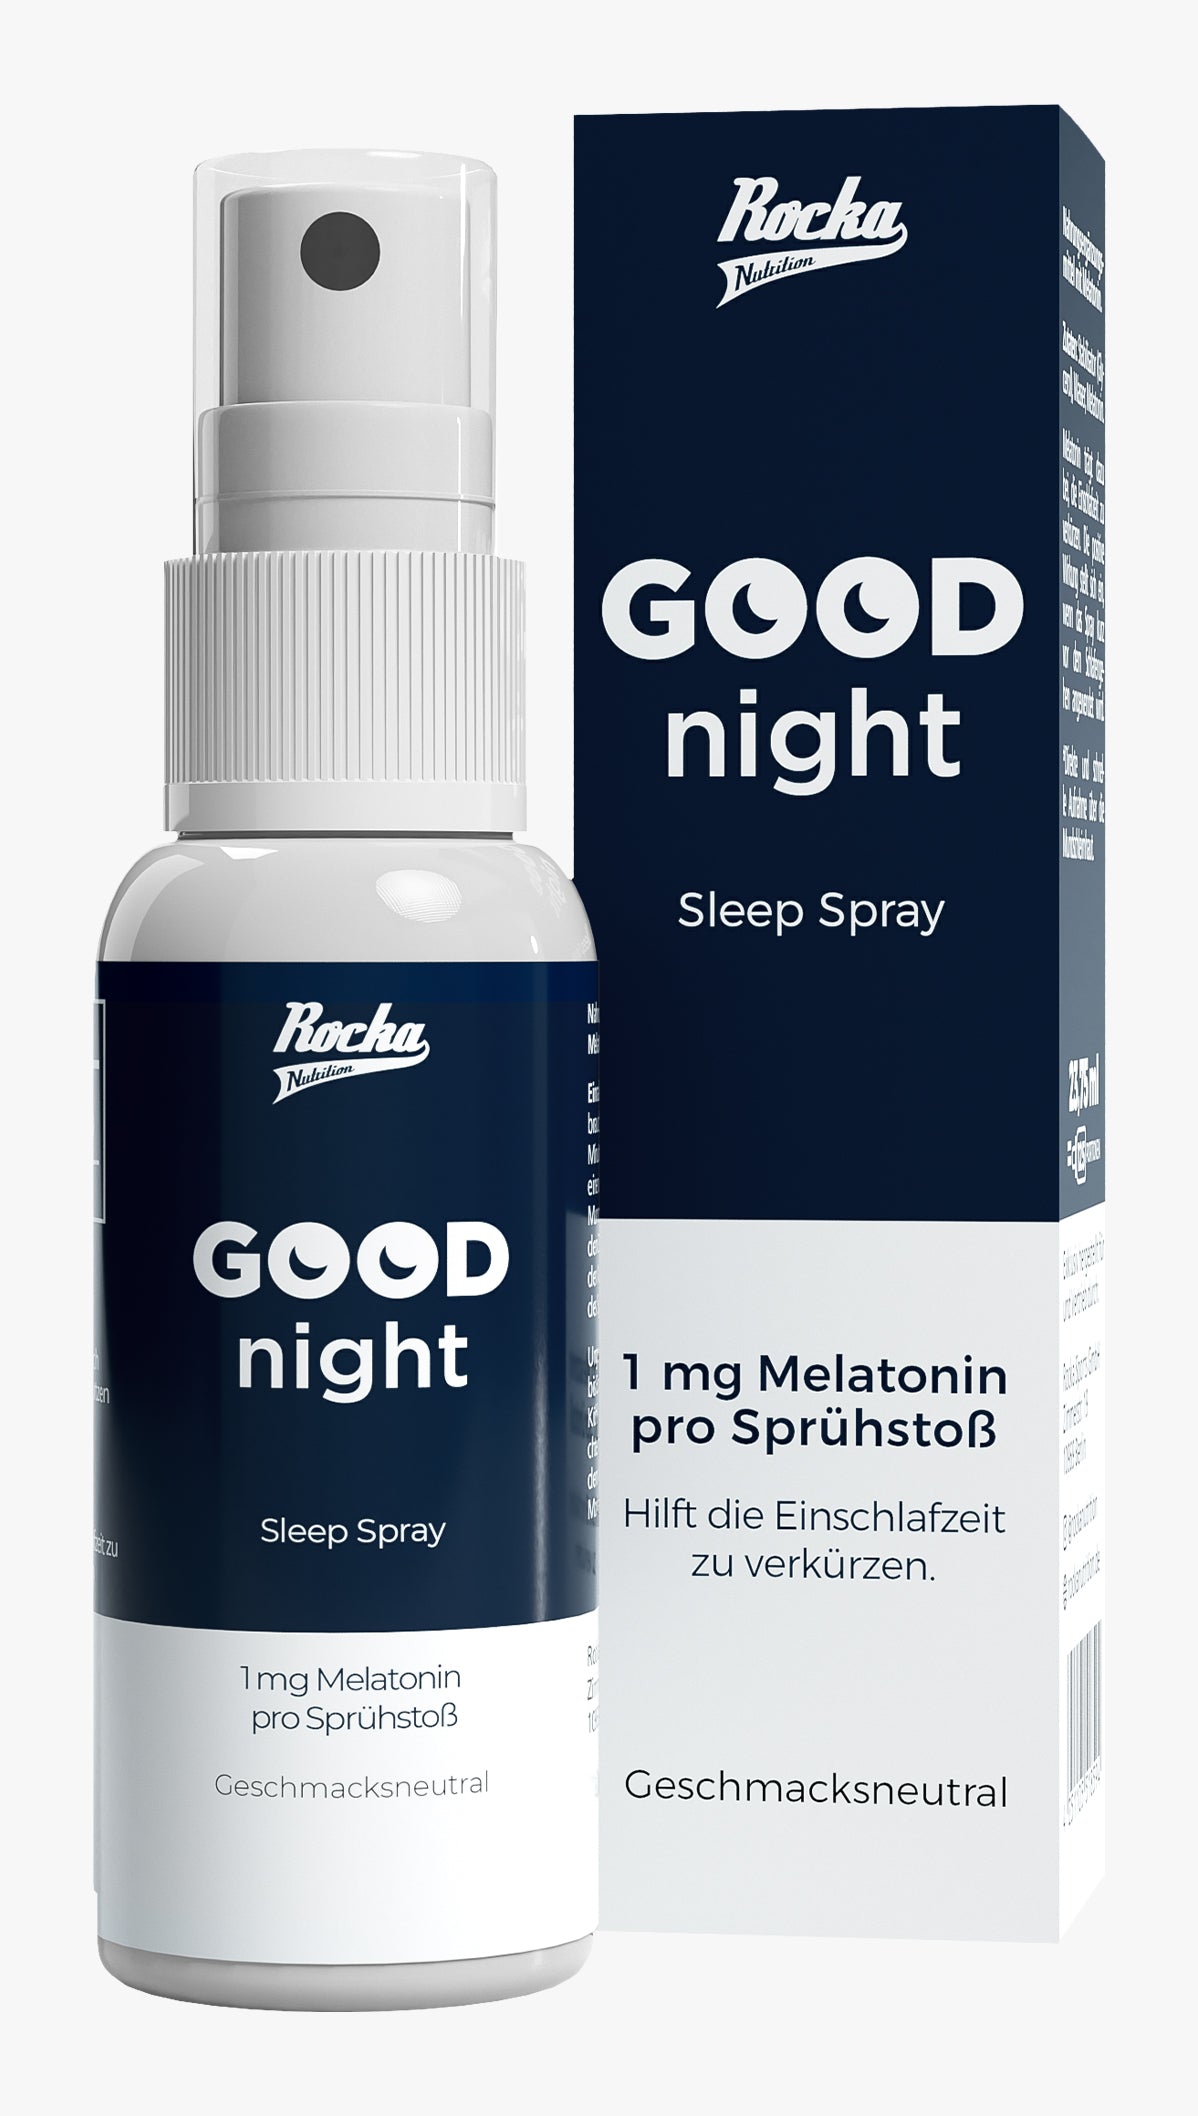 Good Night Sleep Spray im Vergleich